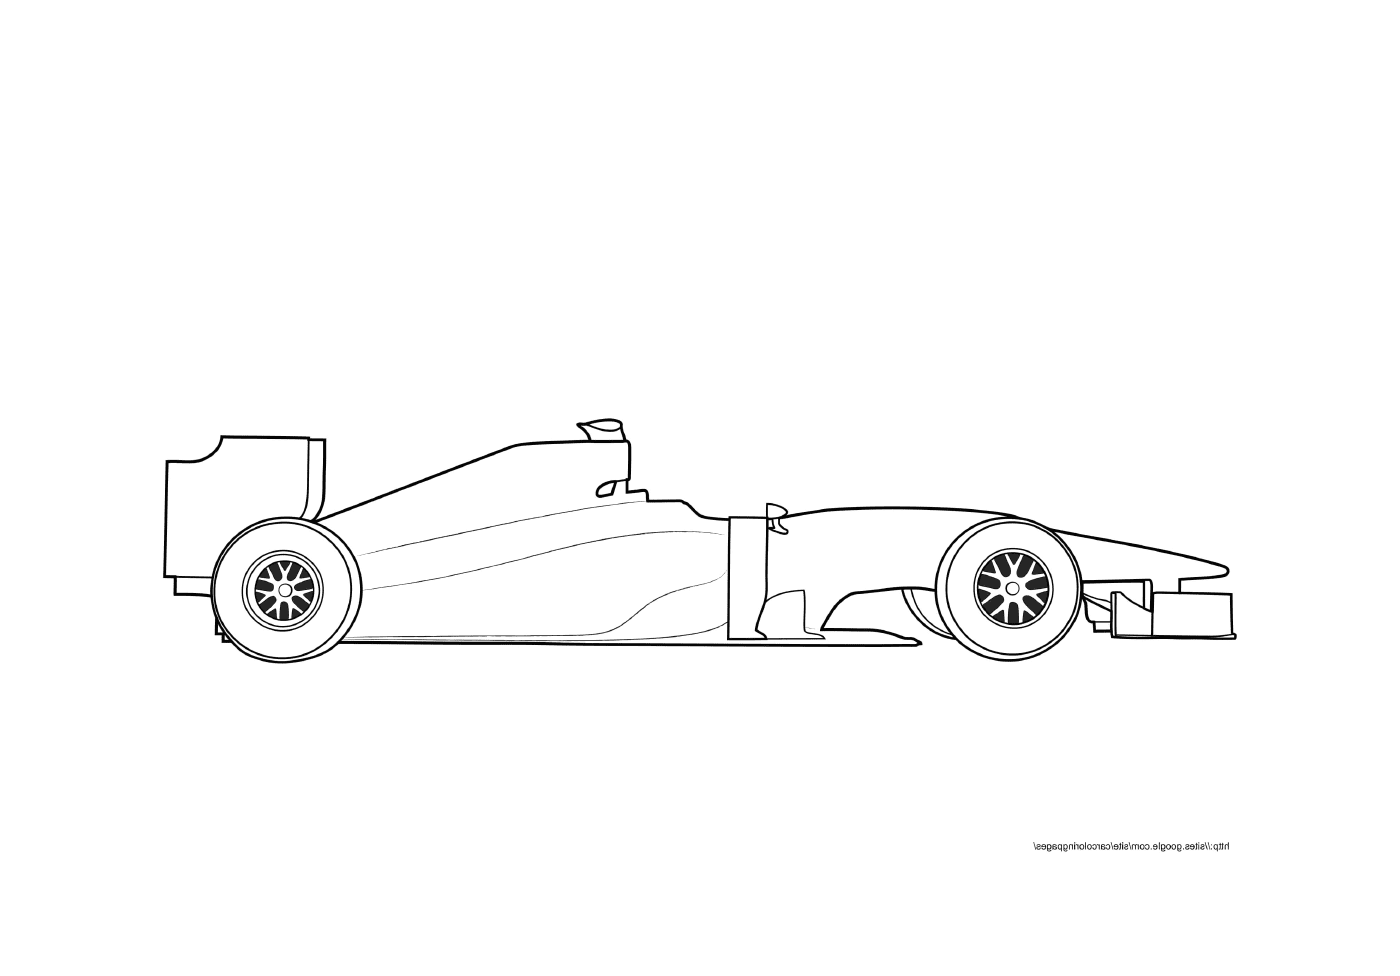  Sport F1 coche etiqueta blanca 